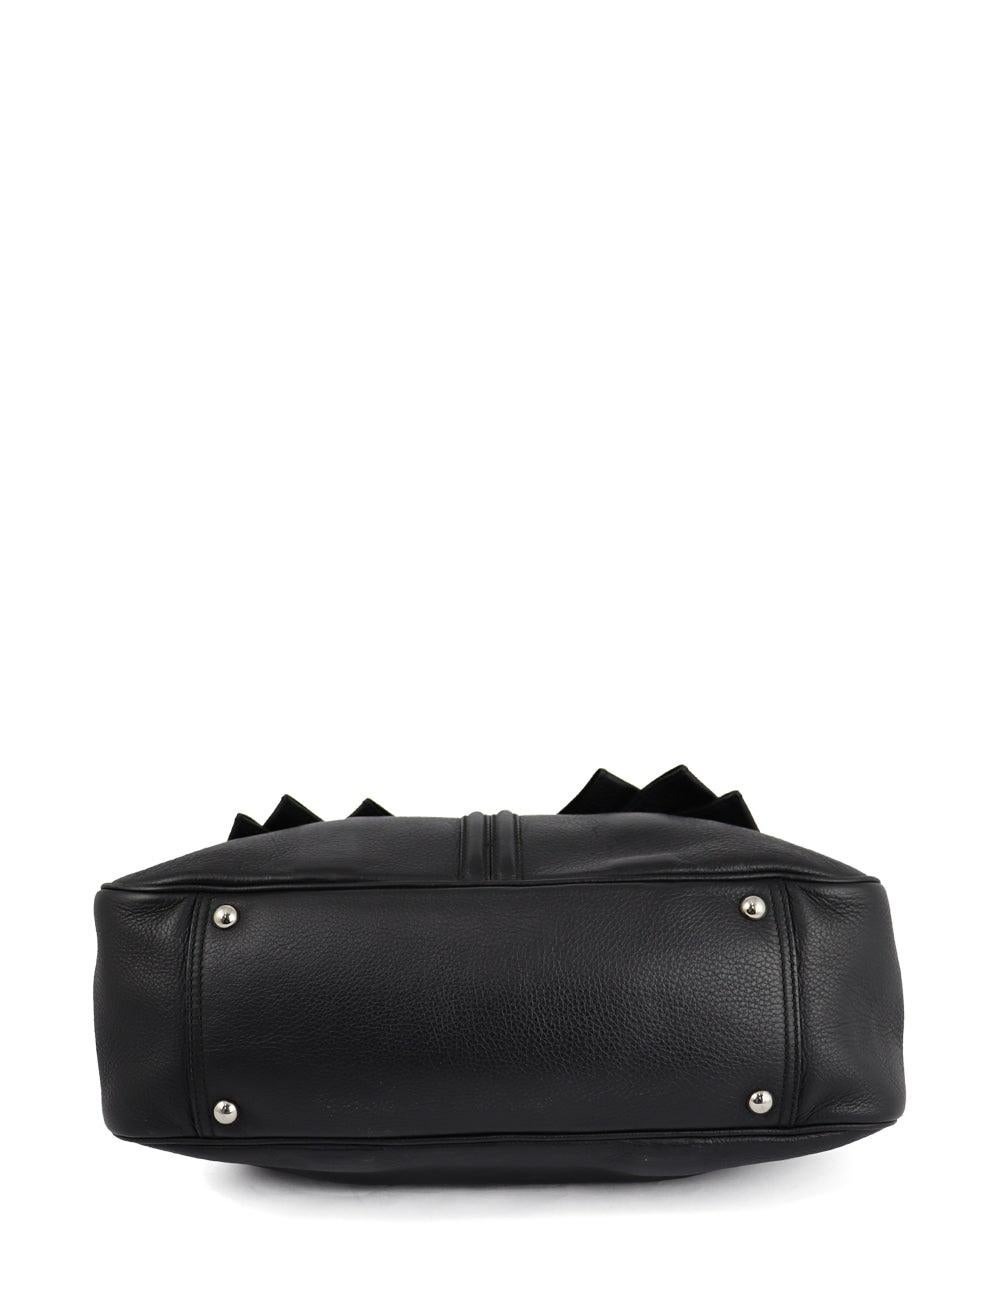 Yves Saint Laurent Black Leather Handbag In Good Condition For Sale In Amman, JO